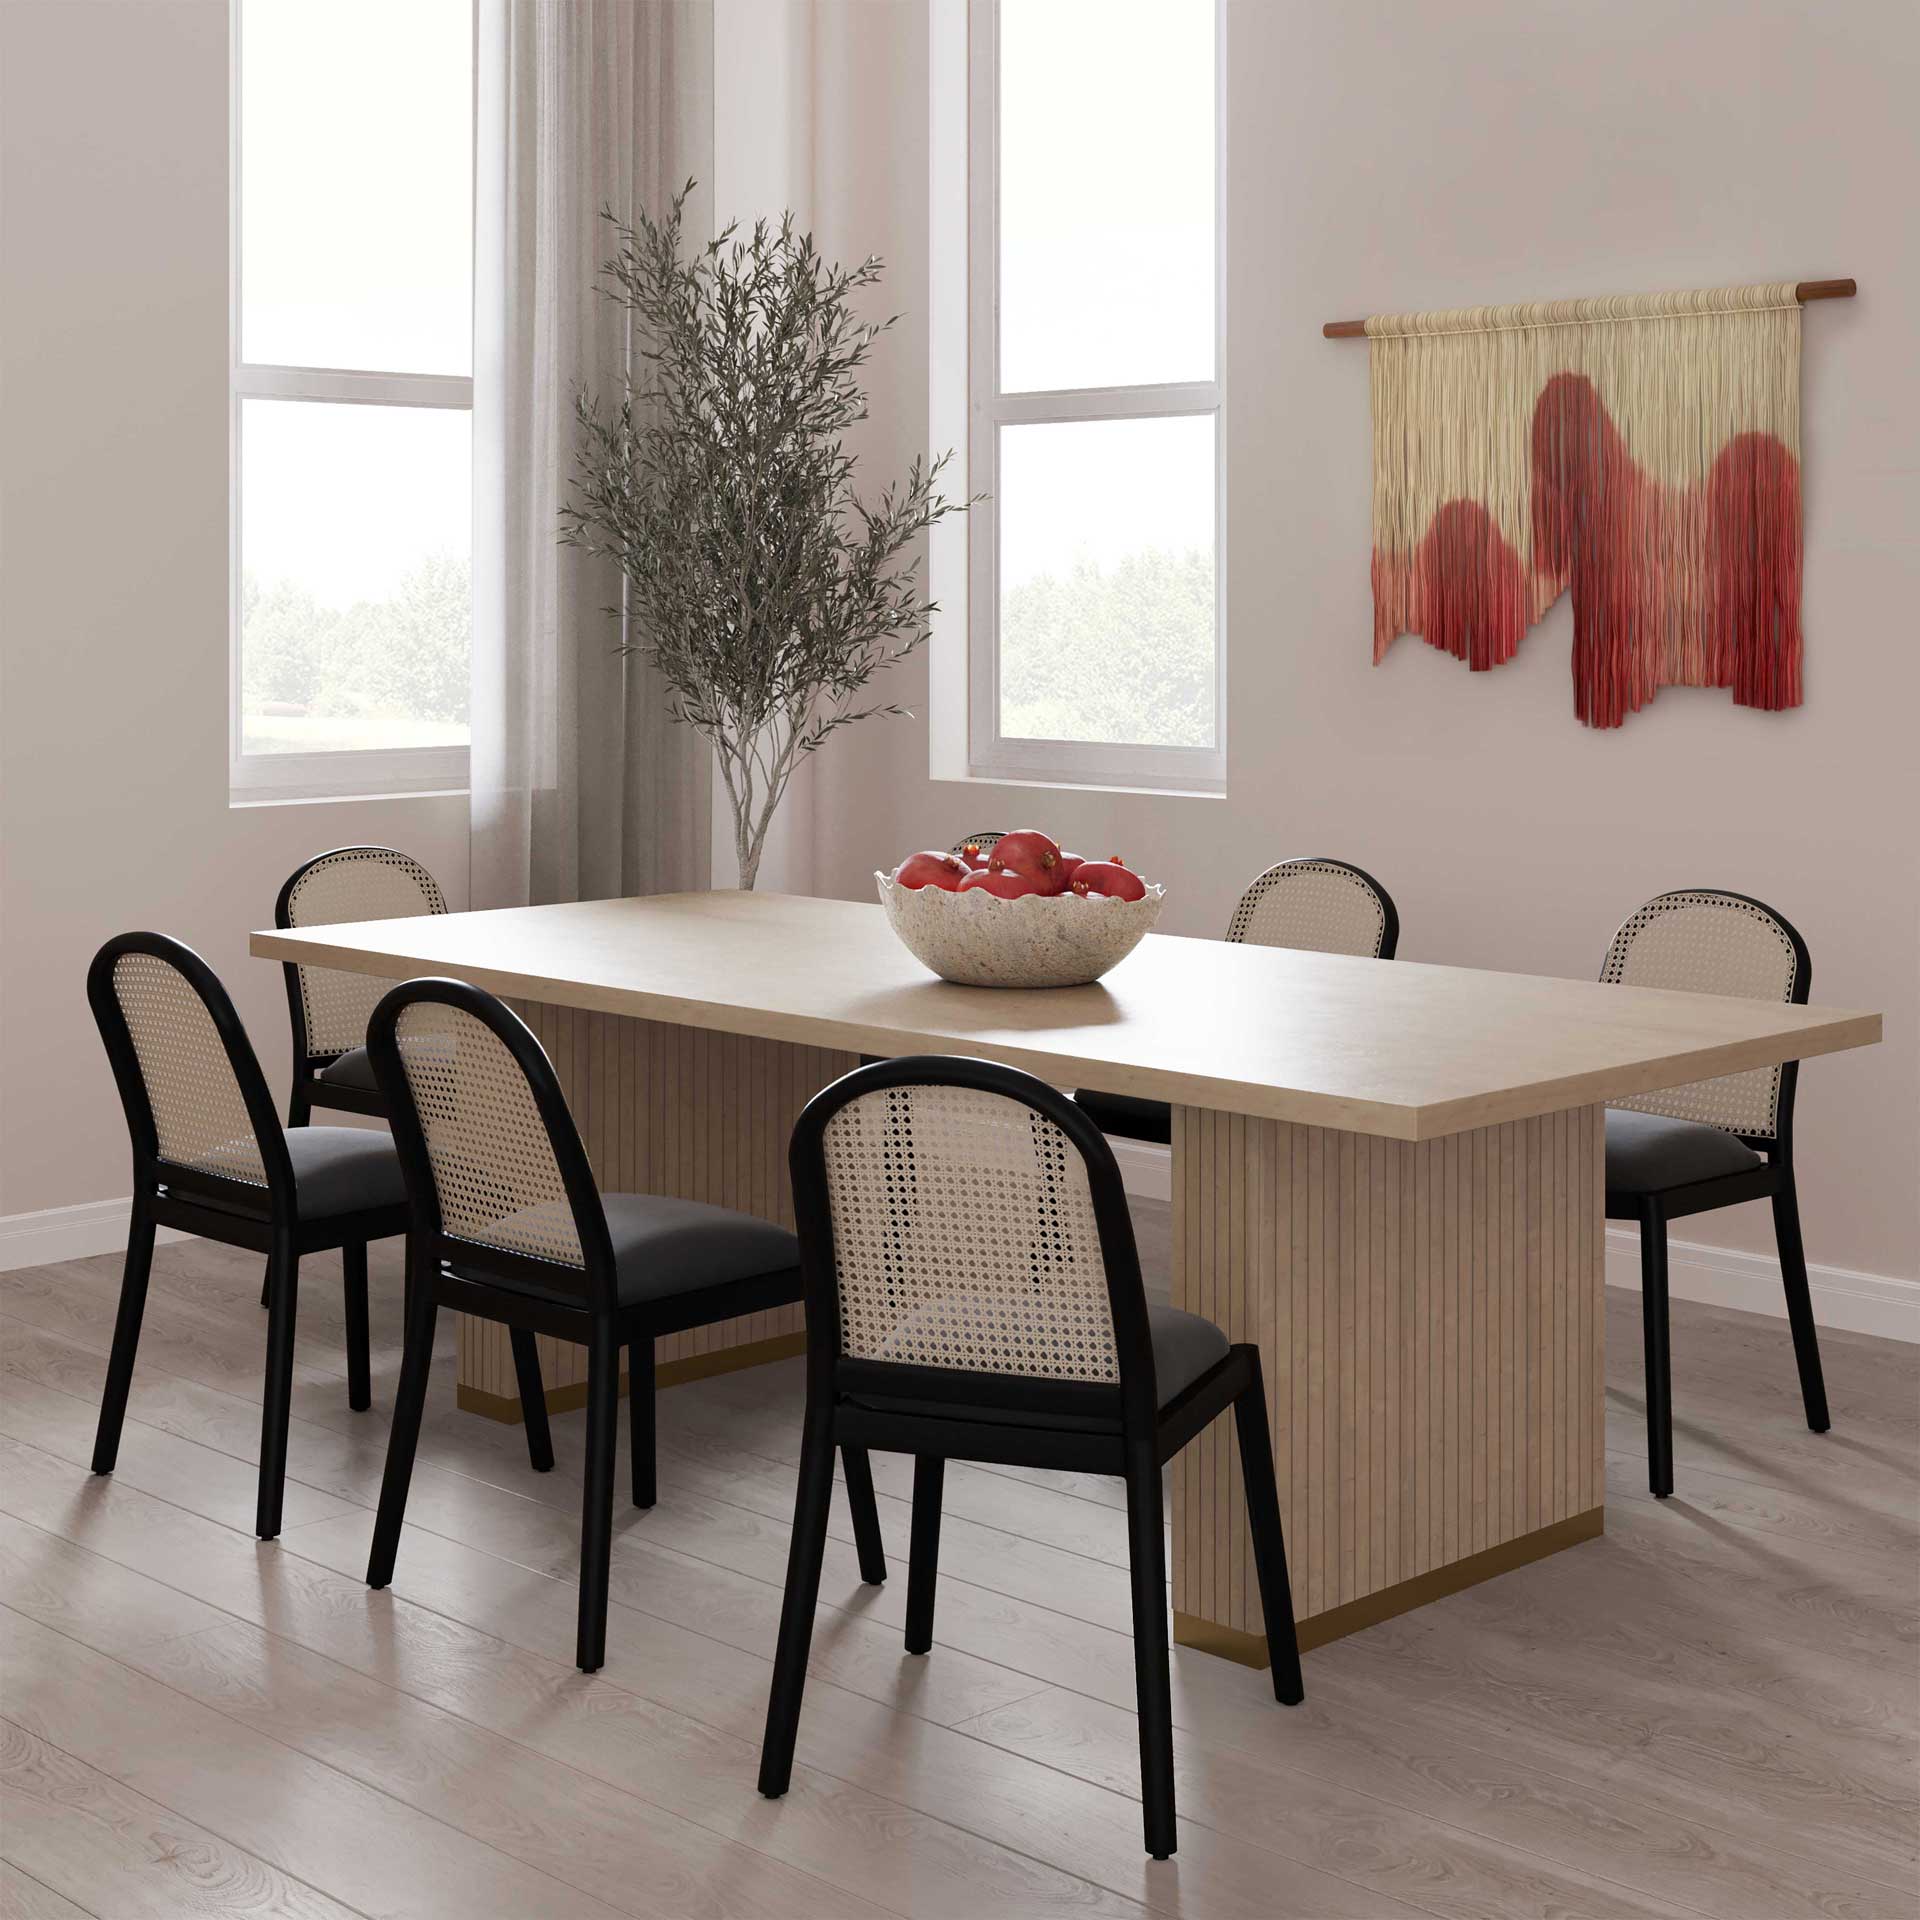 Chance Ash Wood Rectangular Dining Table Natural